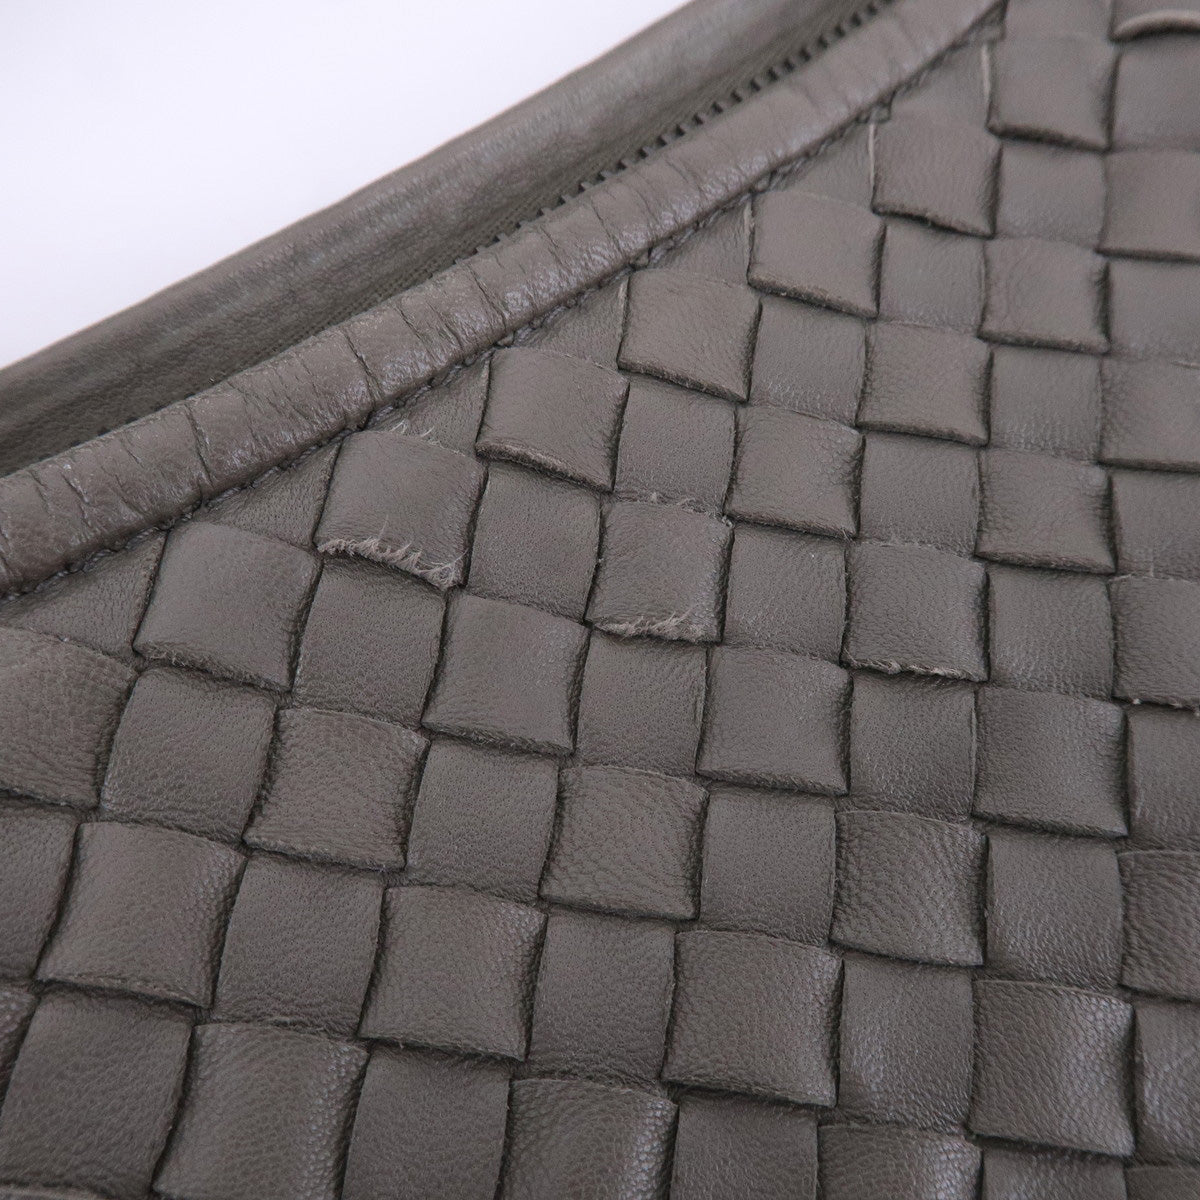 BOTTEGA VENETA Intrecciato Hobo Leather Shoulder Bag Khaki